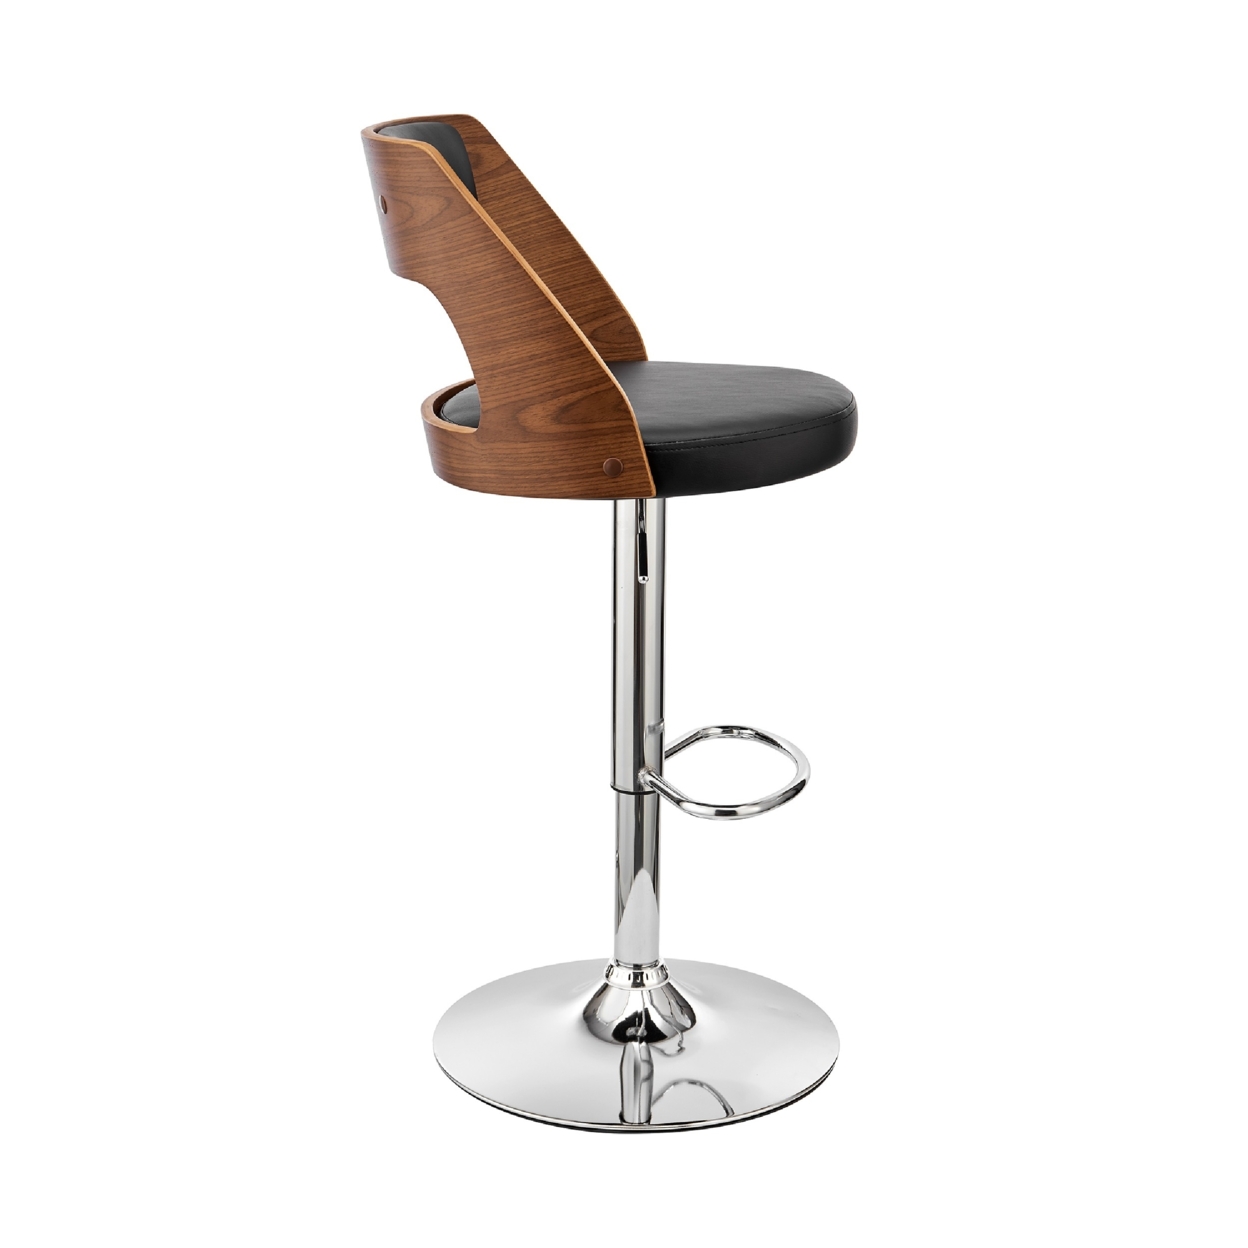 Adjustable Barstool With Open Design Wooden Back, Black And Brown- Saltoro Sherpi